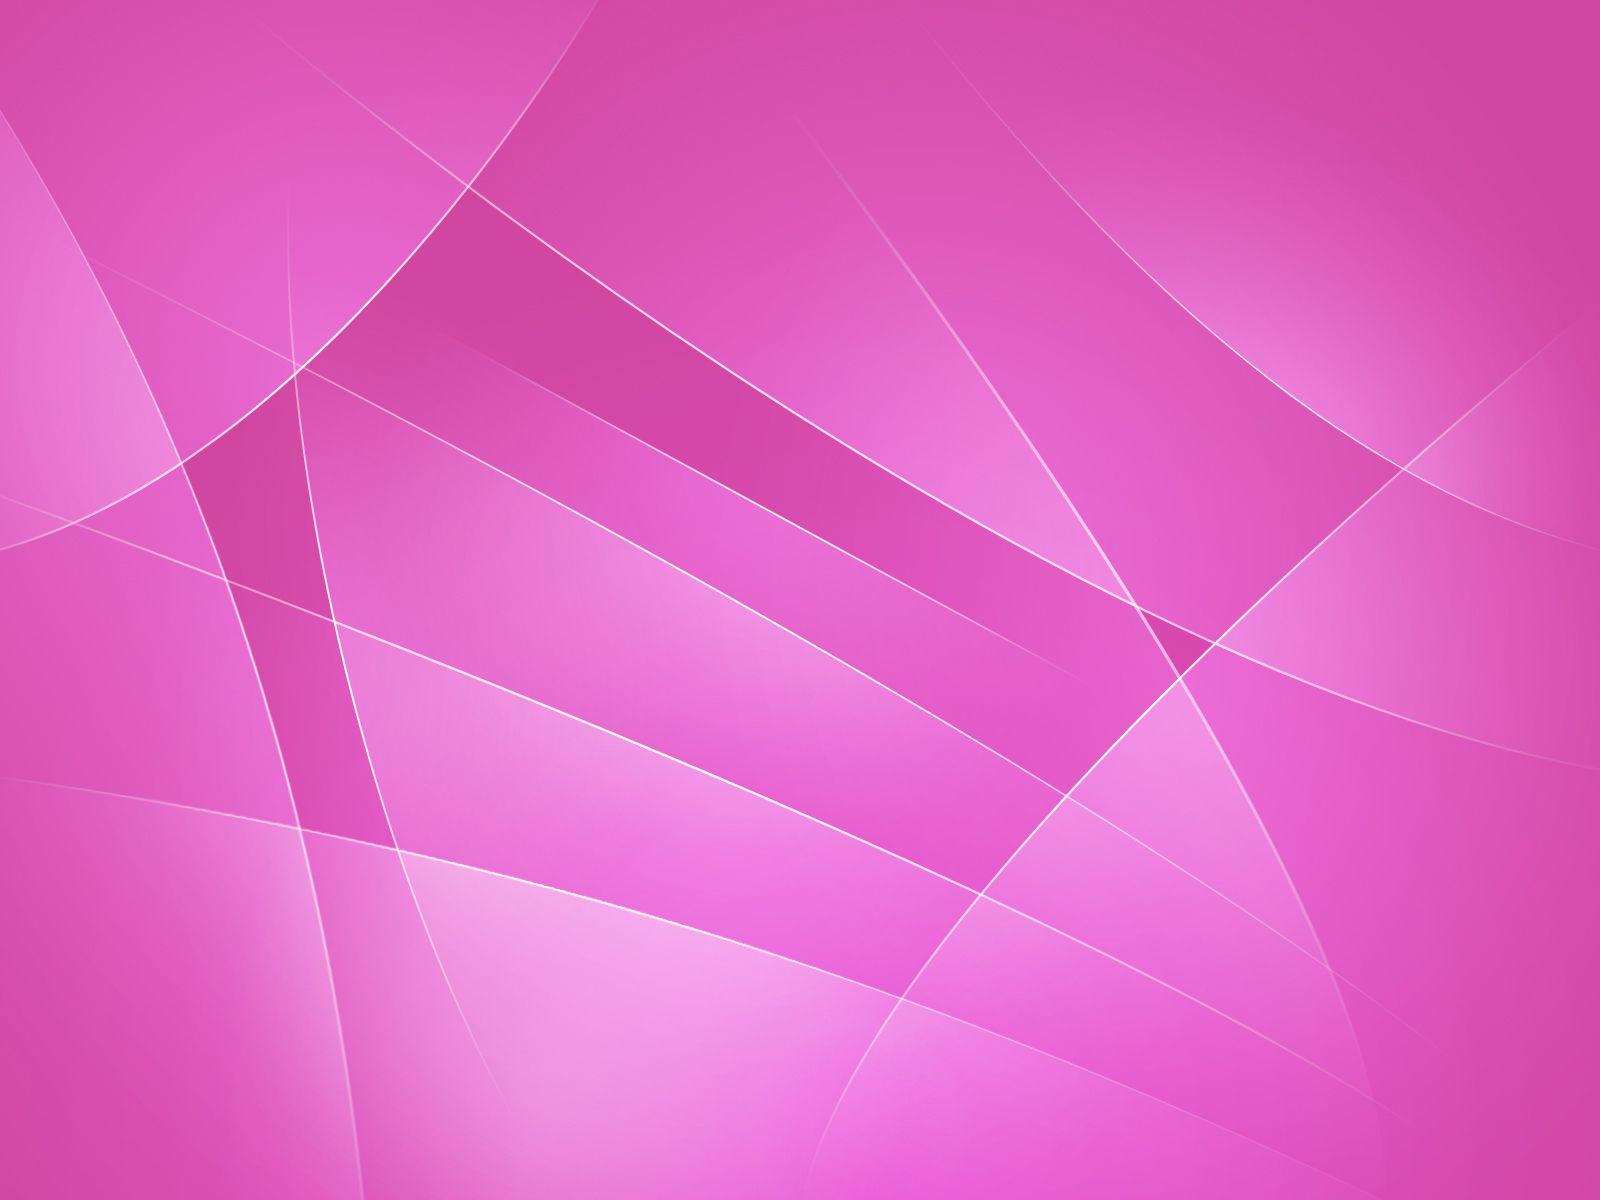 Light Pink Image